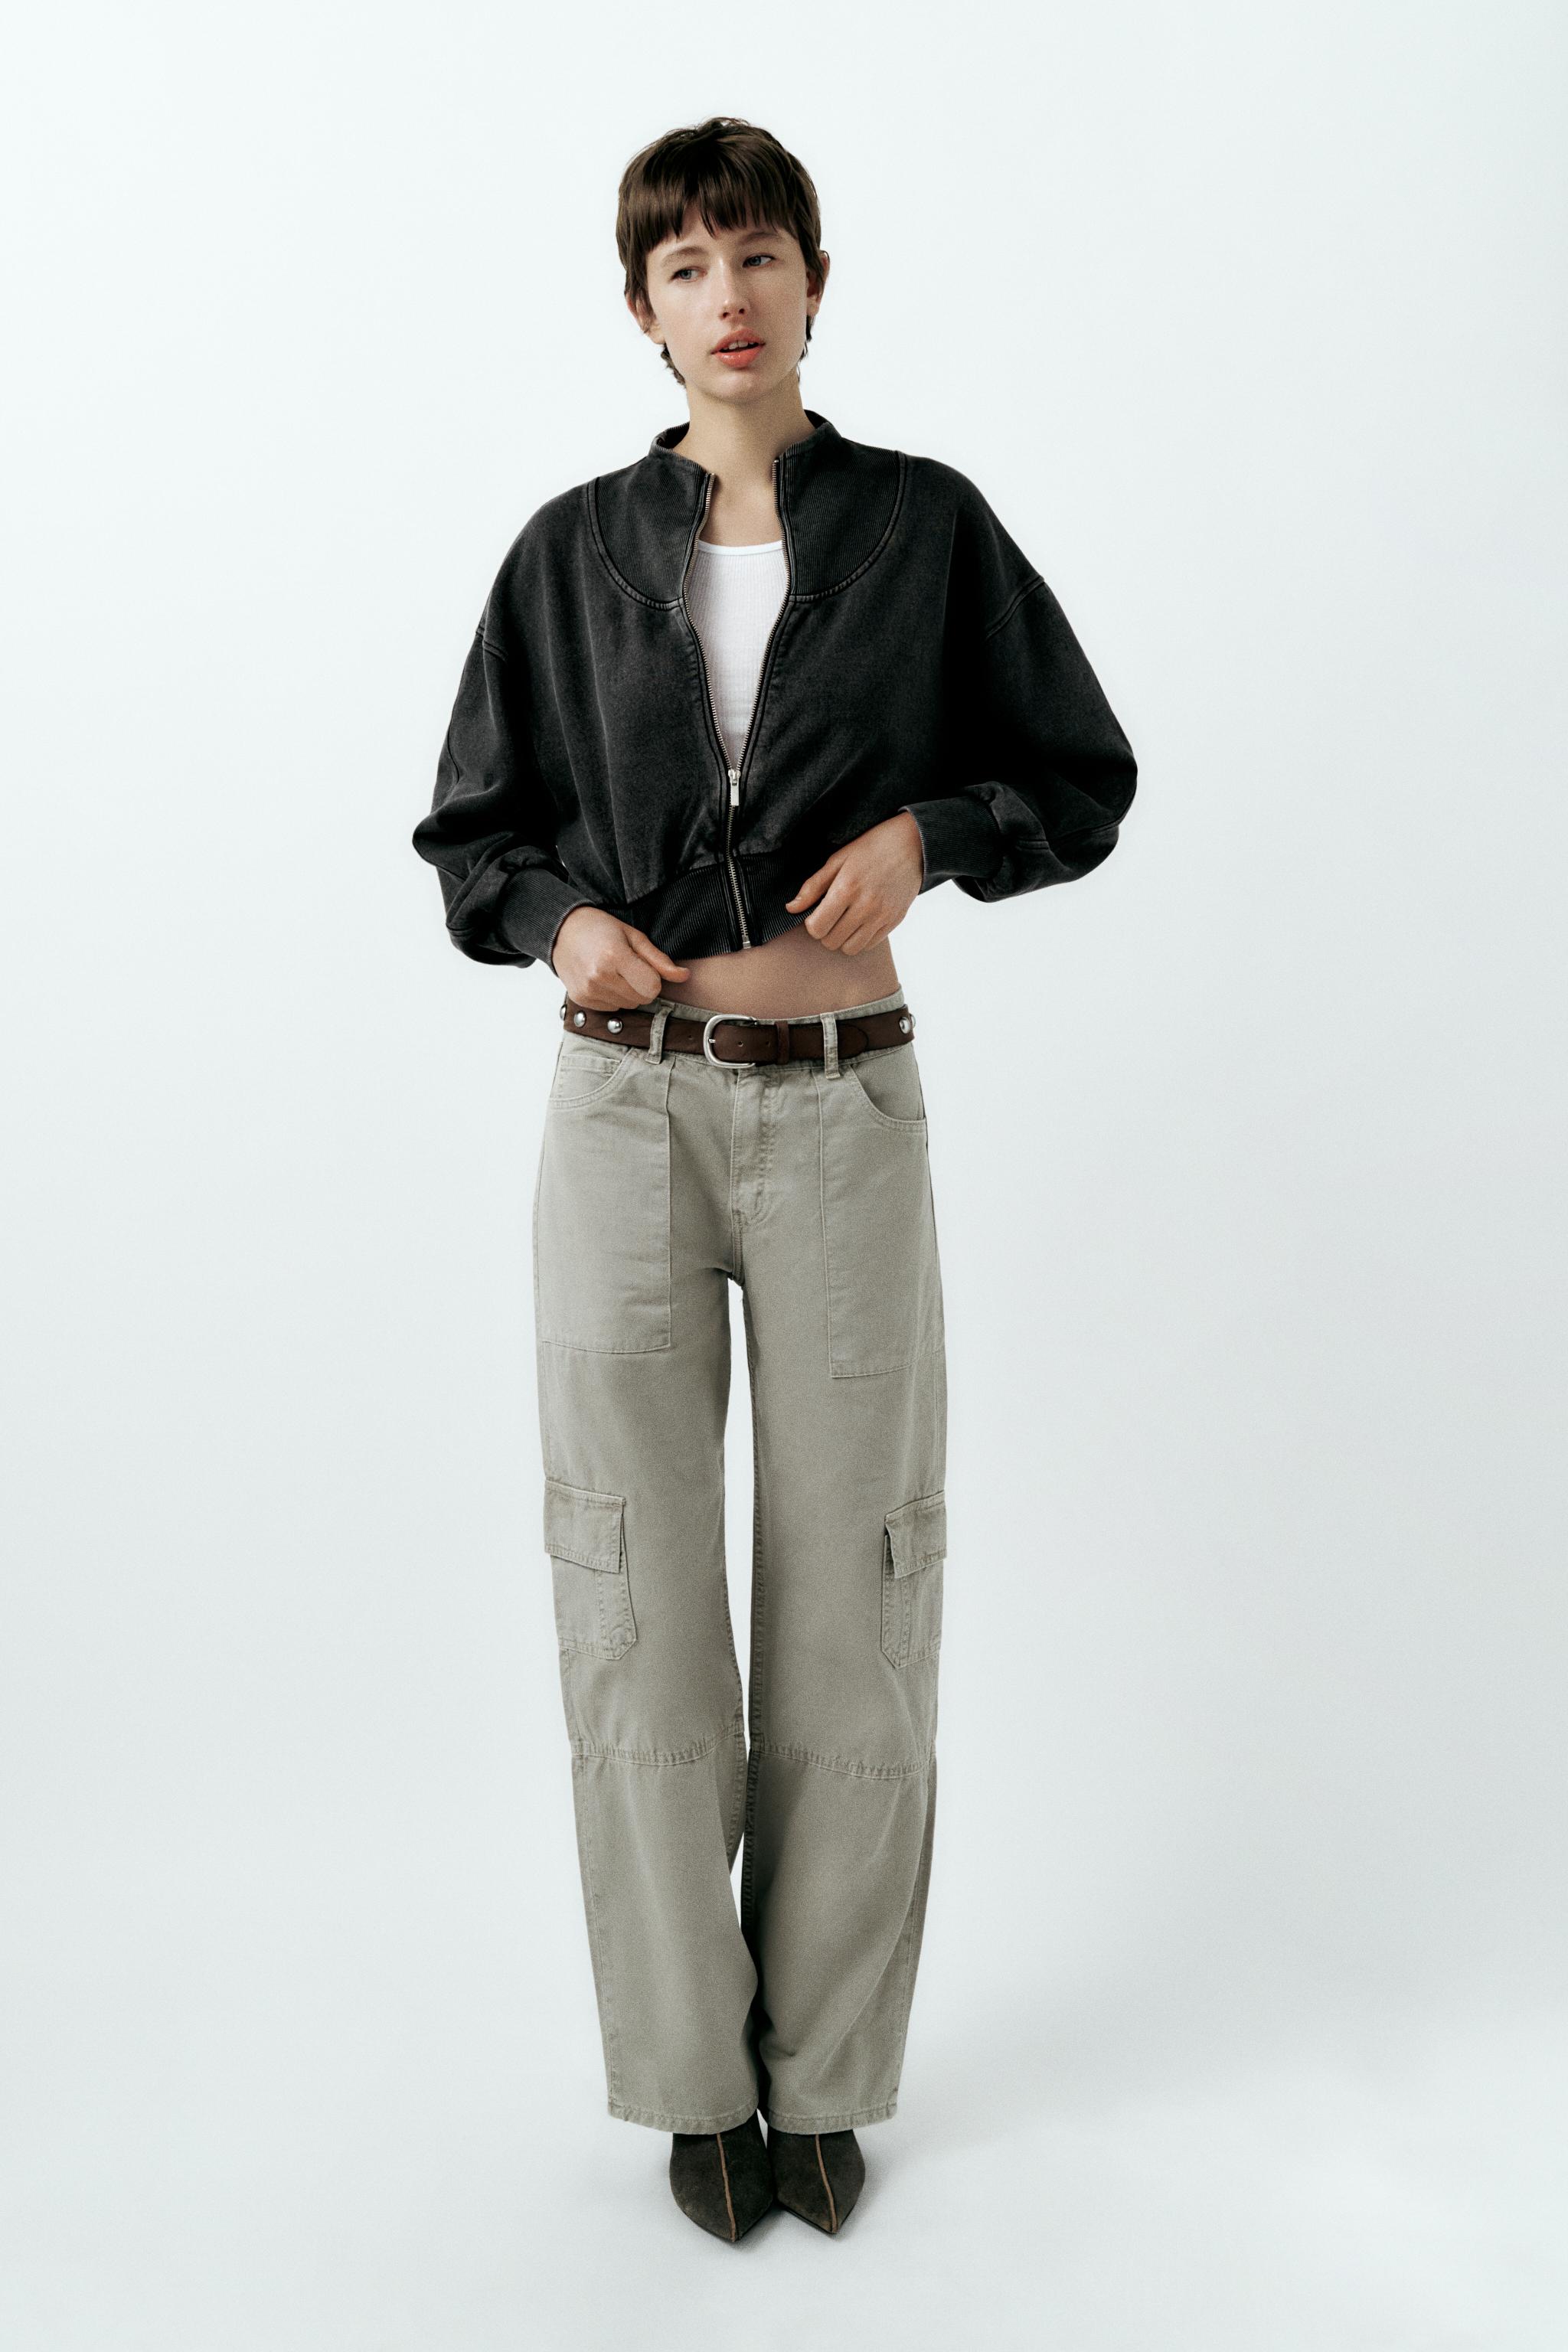 Olive Pants Brand: Zara Ref.: 7901/532/510